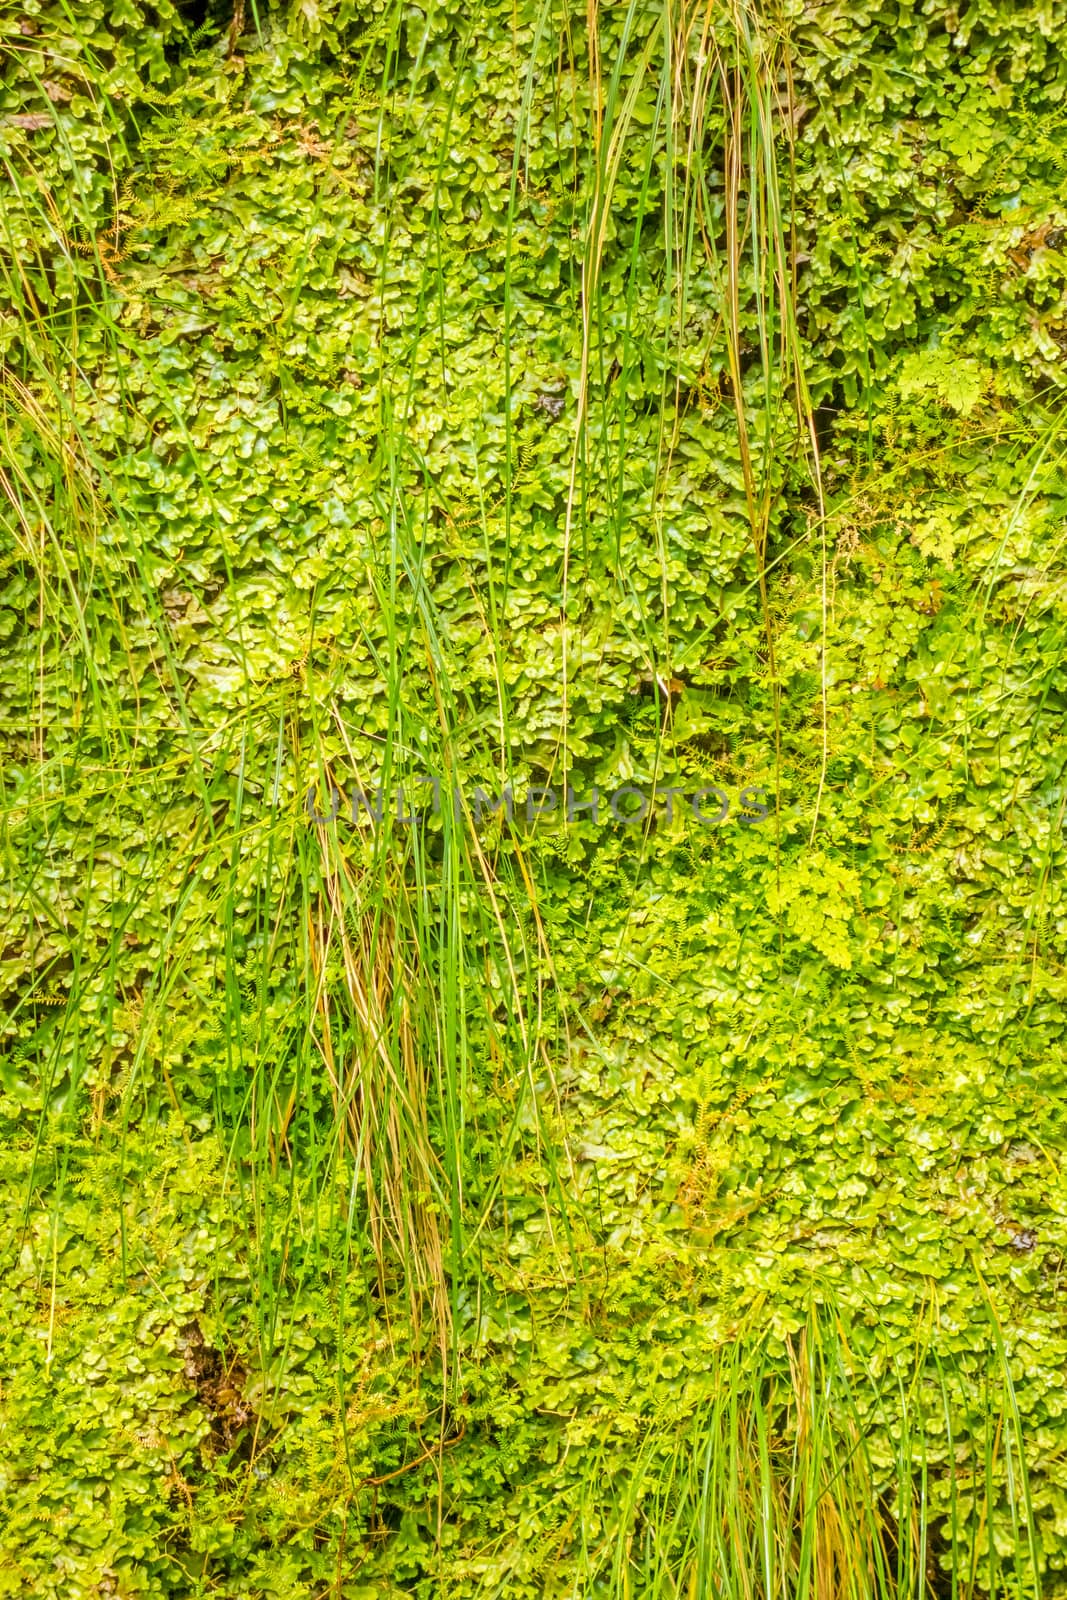 green tropical fern plant wall - detail shot